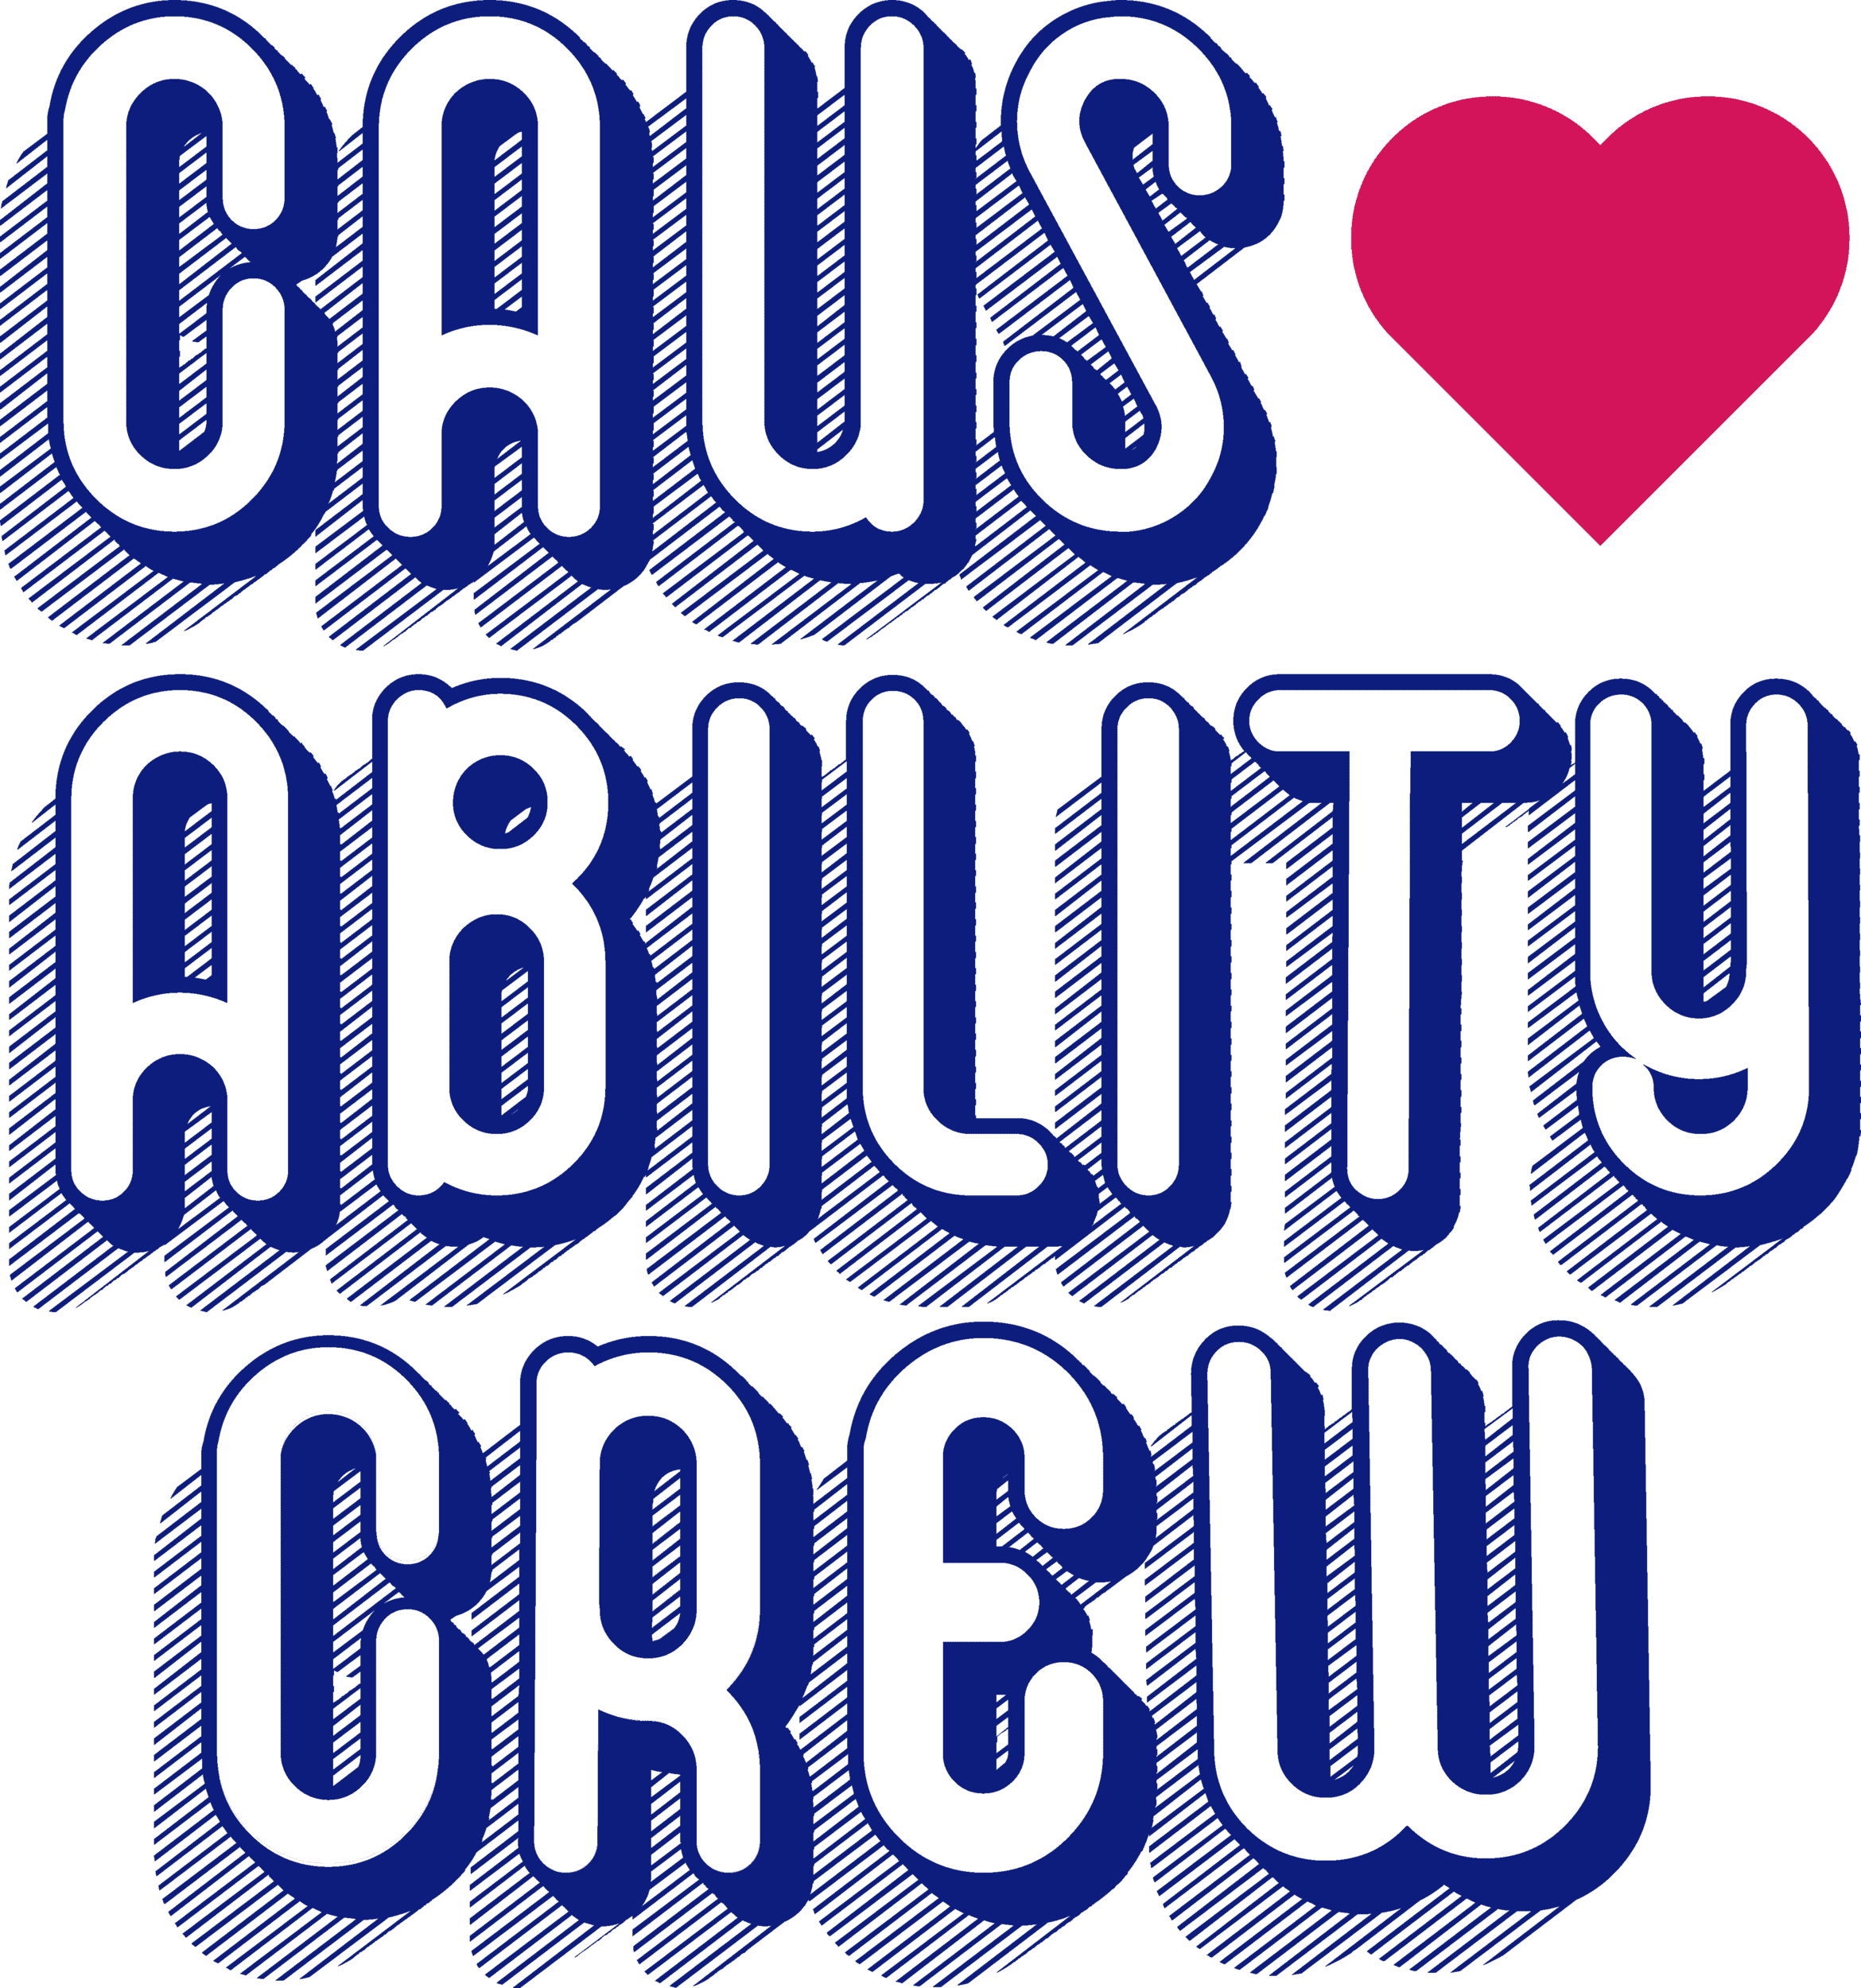 causability-crew-logo_working2